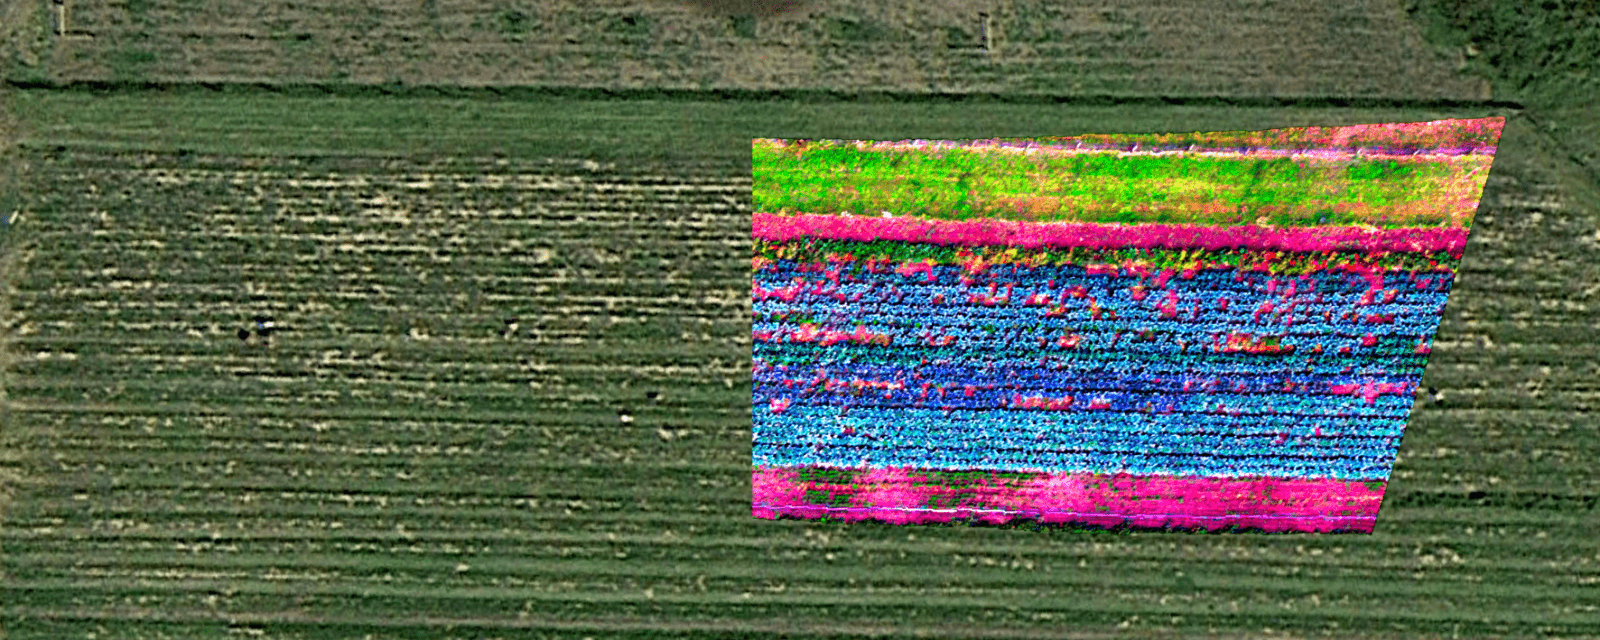 Hyperspectral scanning system Remote Sensing Data of Agriculture